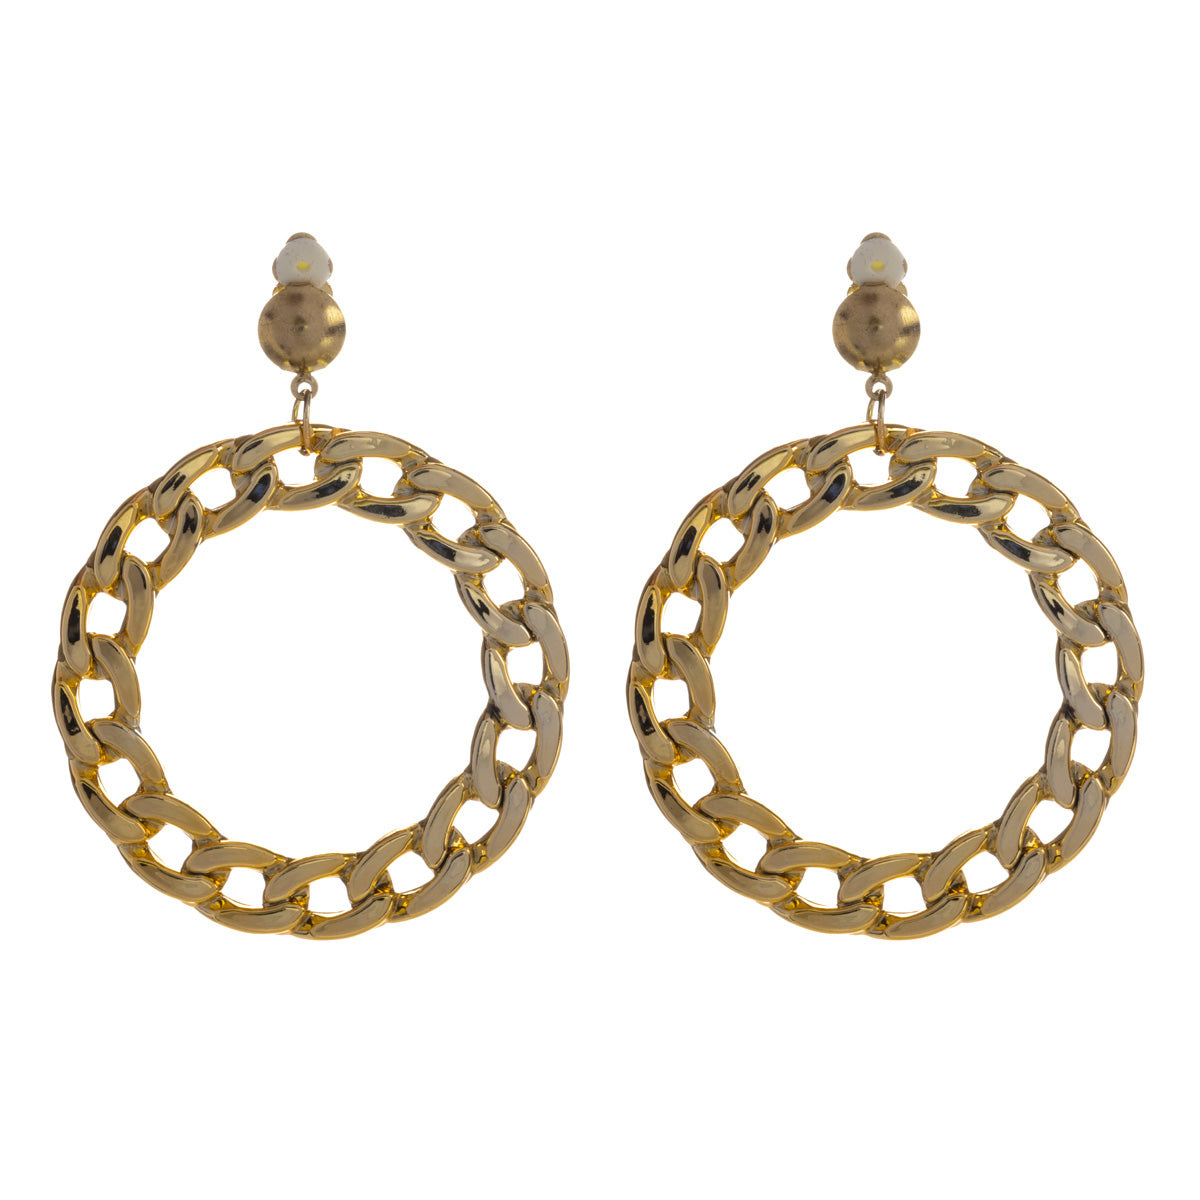 Chain ring clip earrings